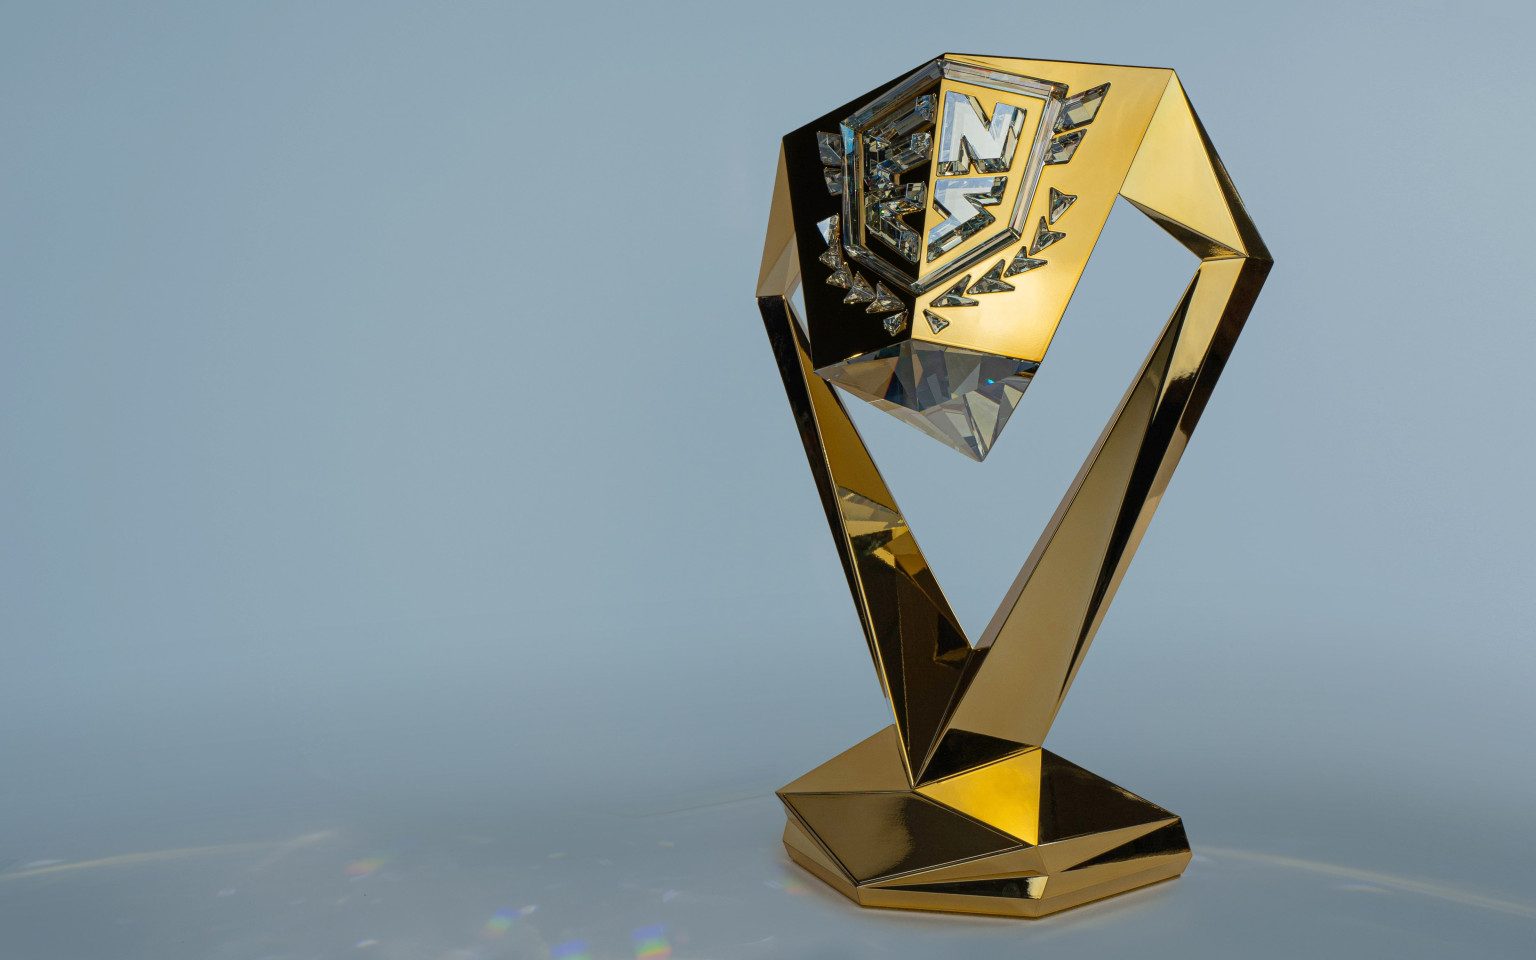 FNCS Global Championship trophy